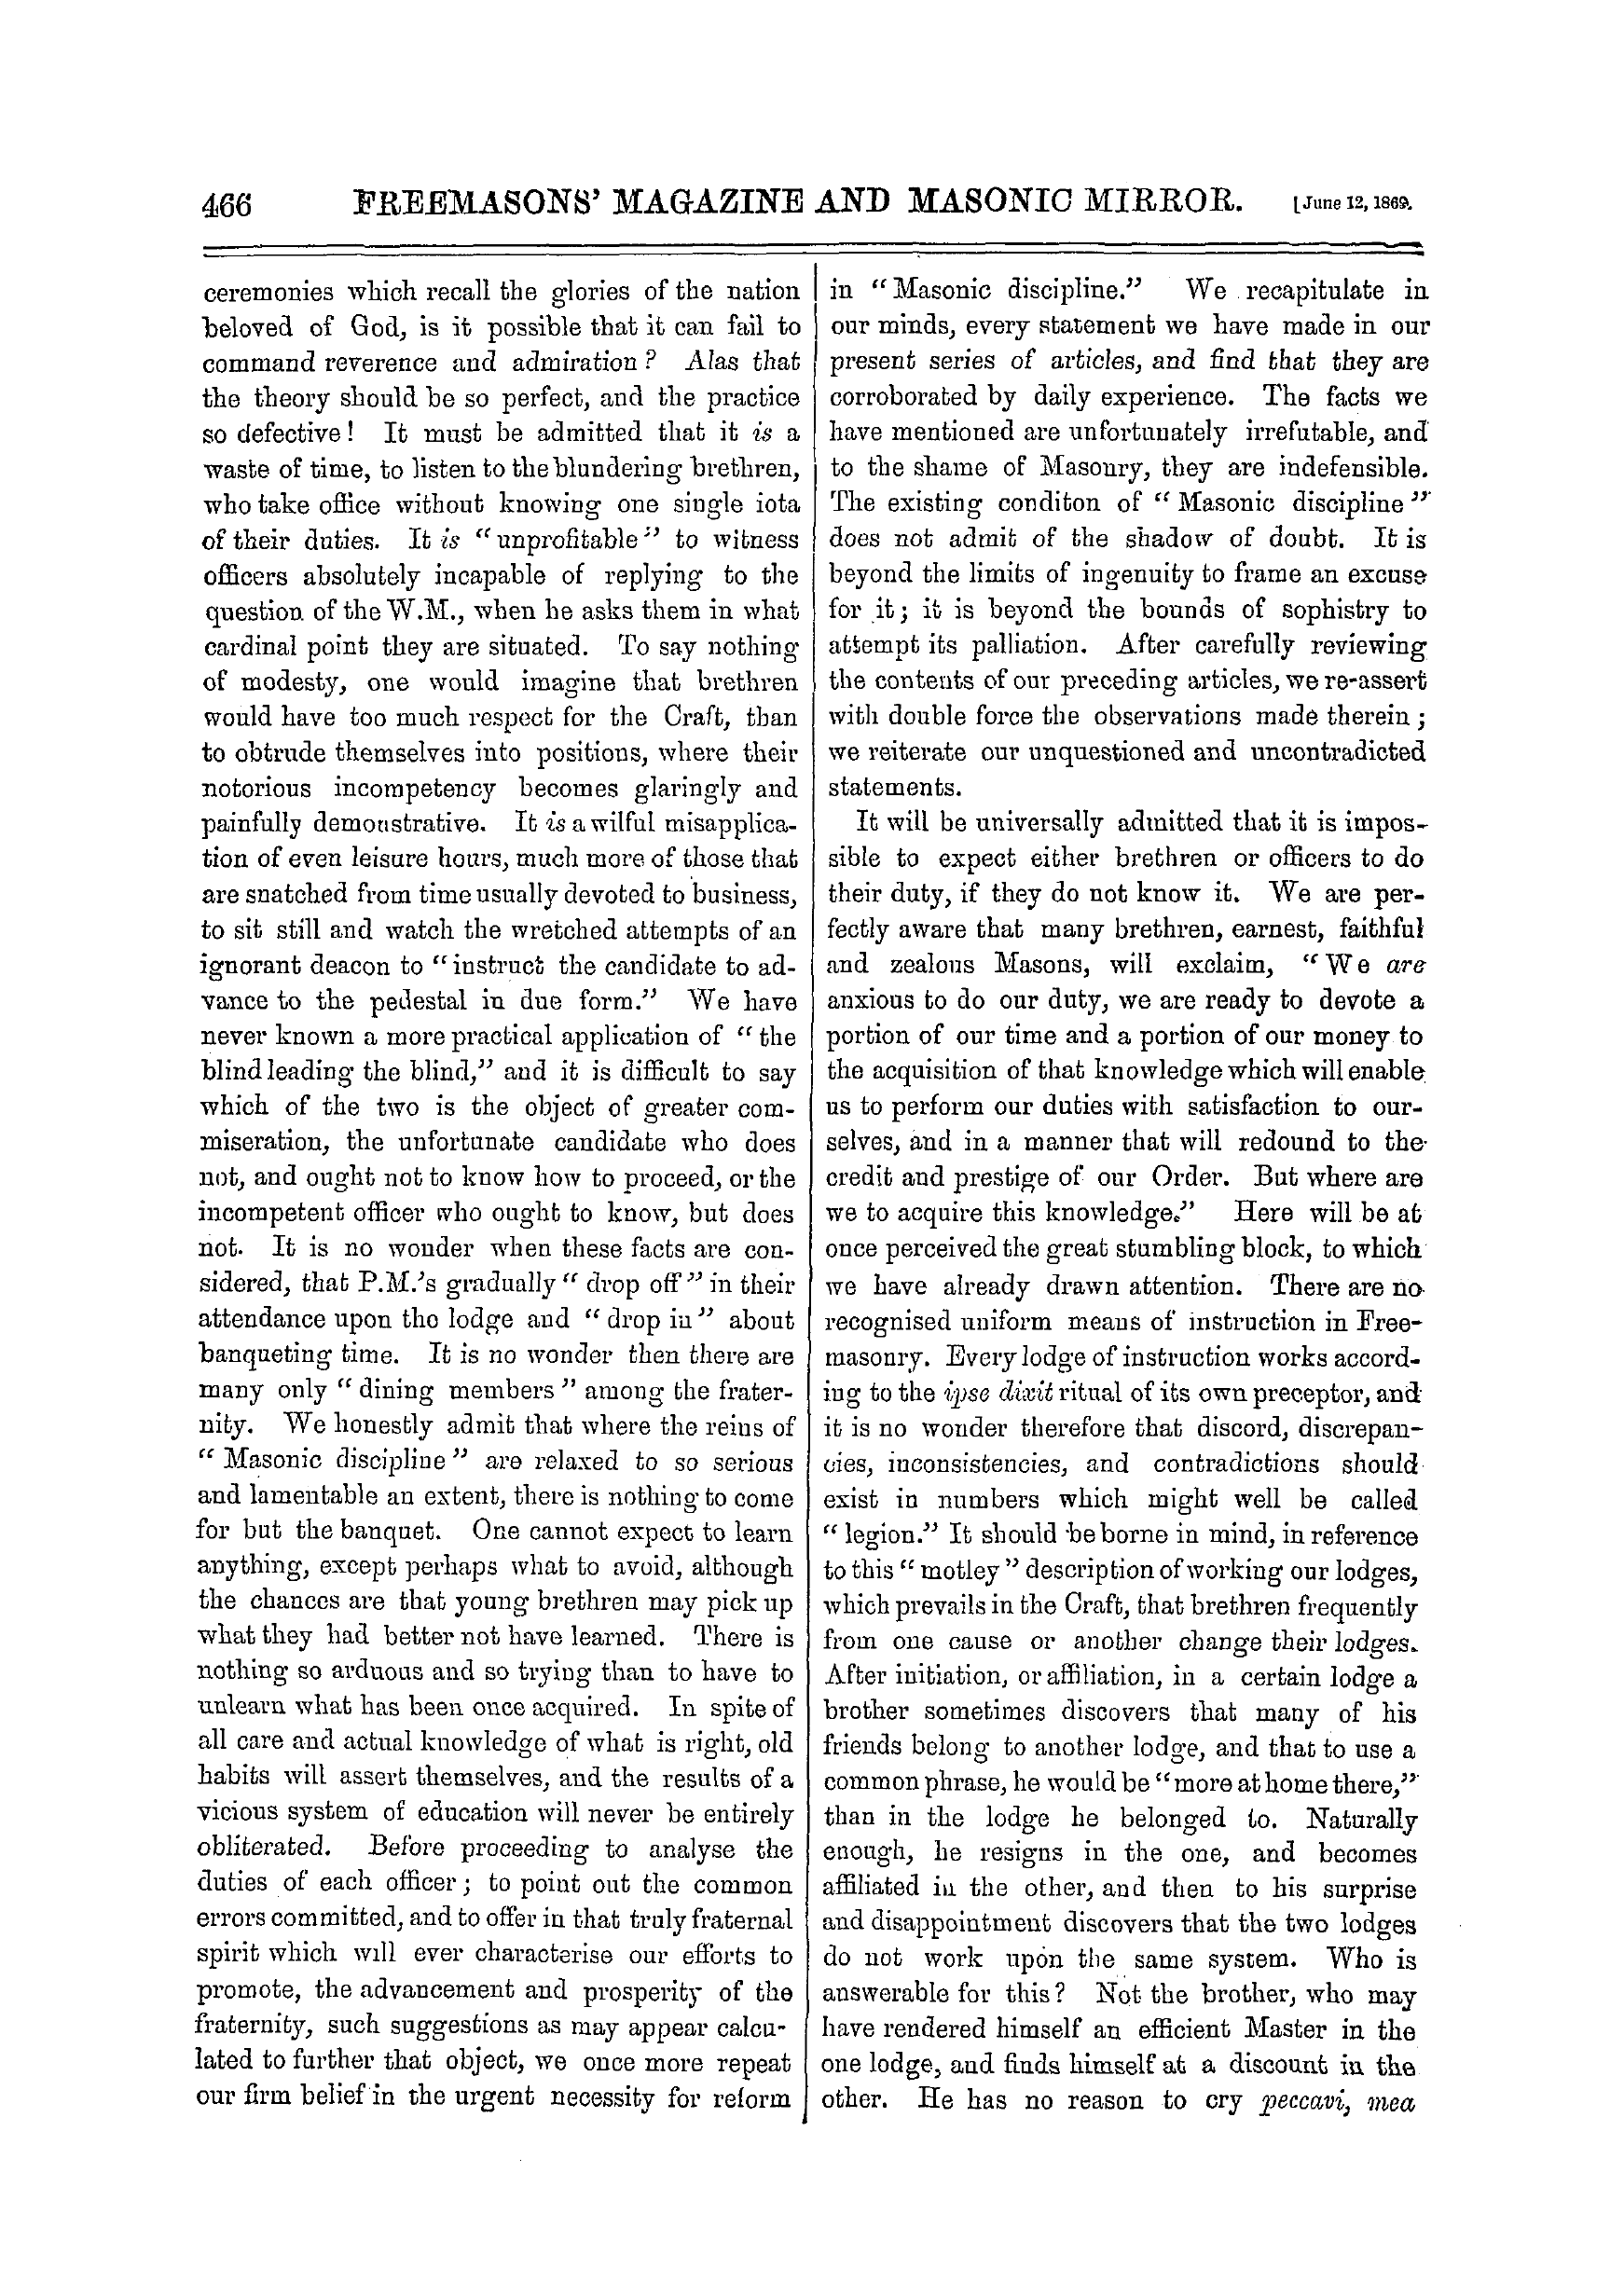 The Freemasons' Monthly Magazine: 1869-06-12 - Masonic Discipline.—Xv.